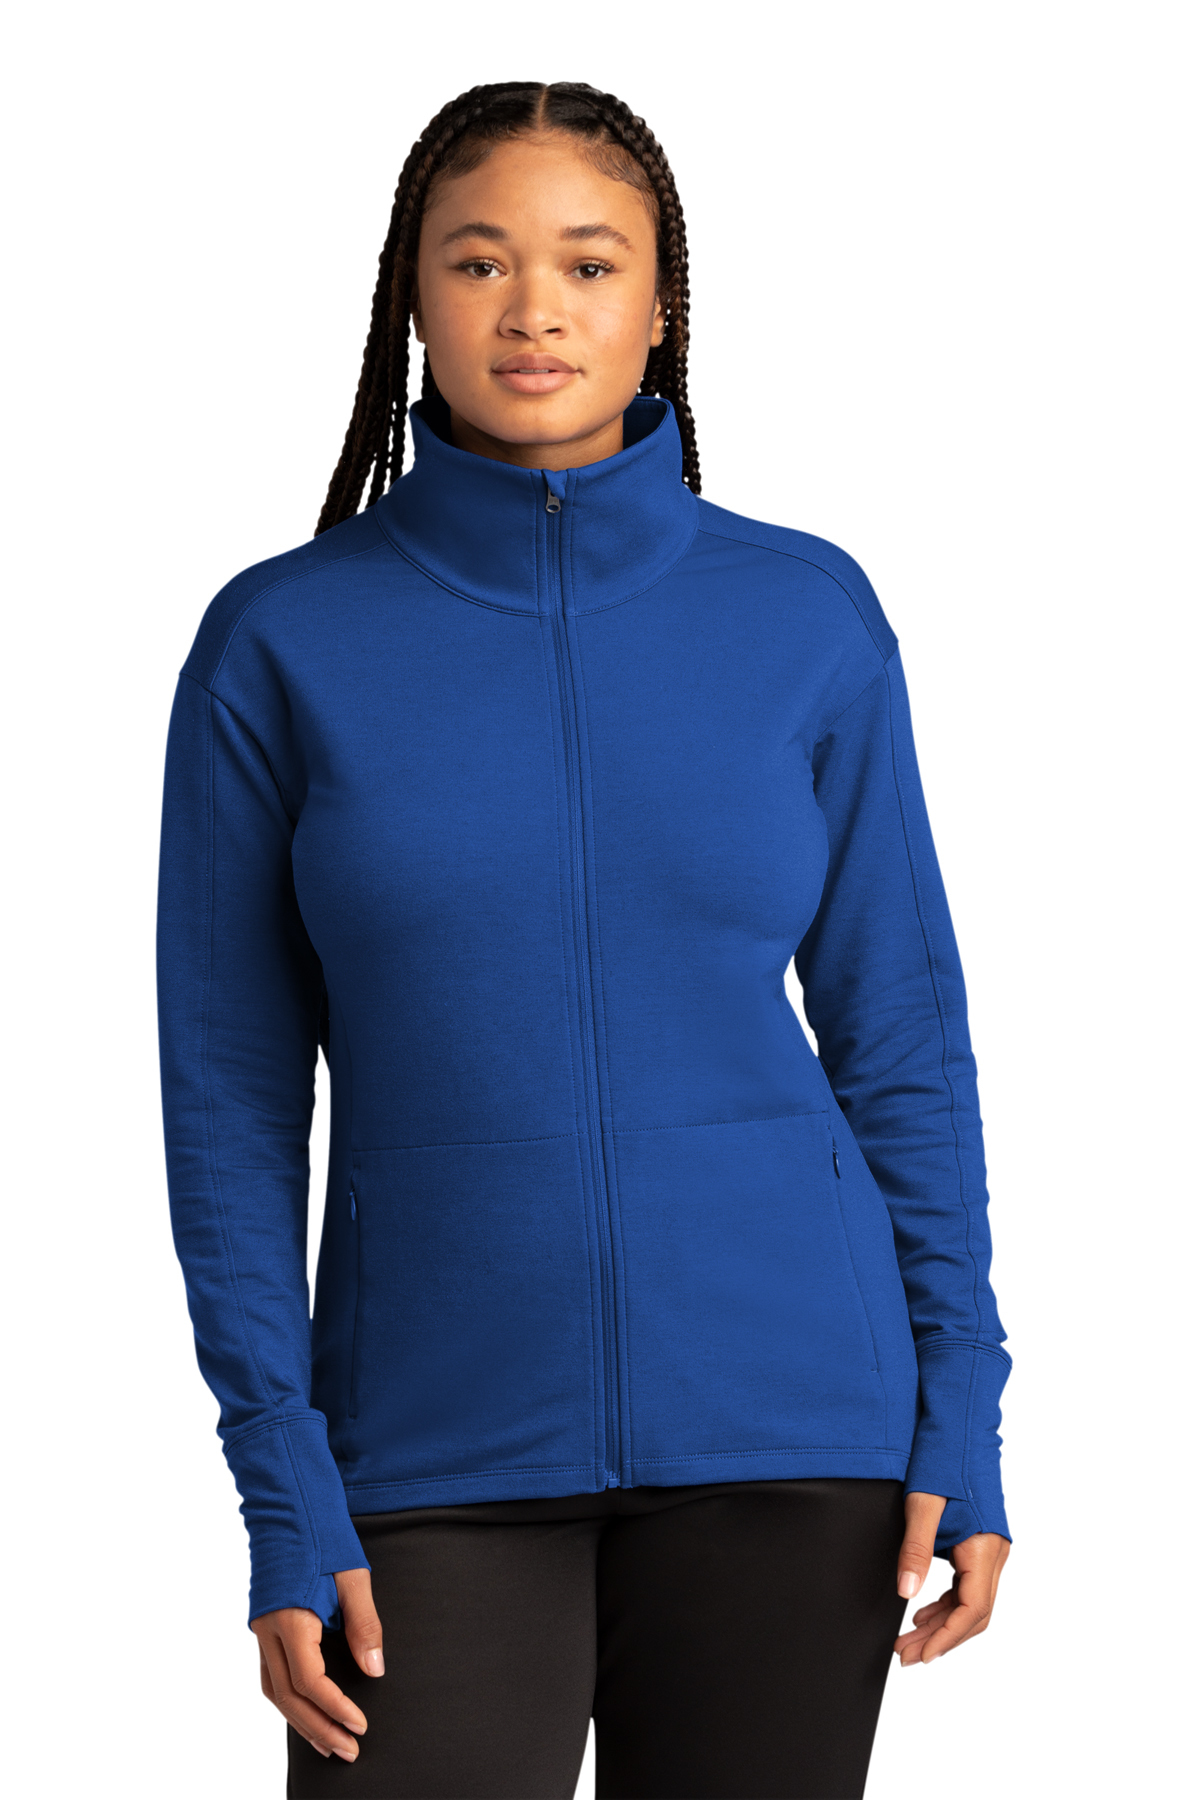 Sport-Tek Ladies Sport-Wick Flex Fleece Full-Zip | Product | Company ...